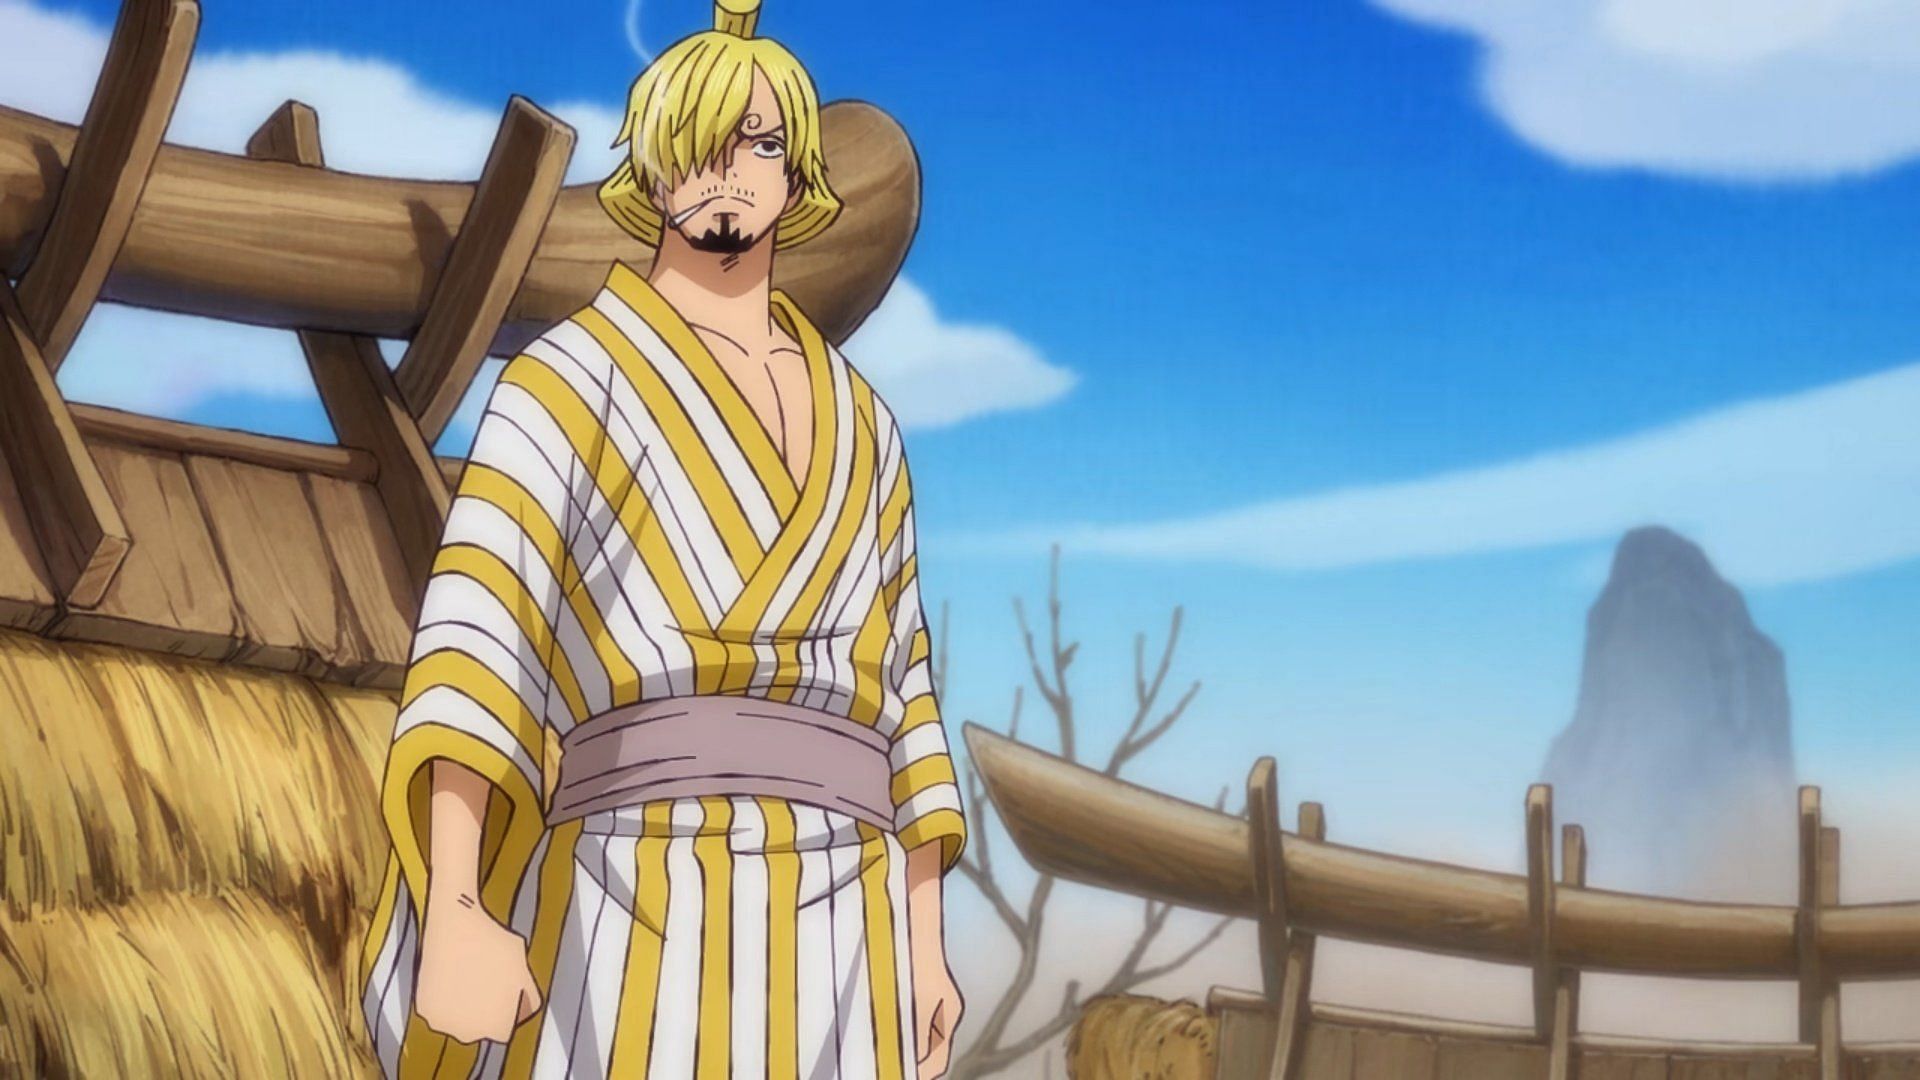 Sanji as seen in One Piece (Image via Toei Animation)